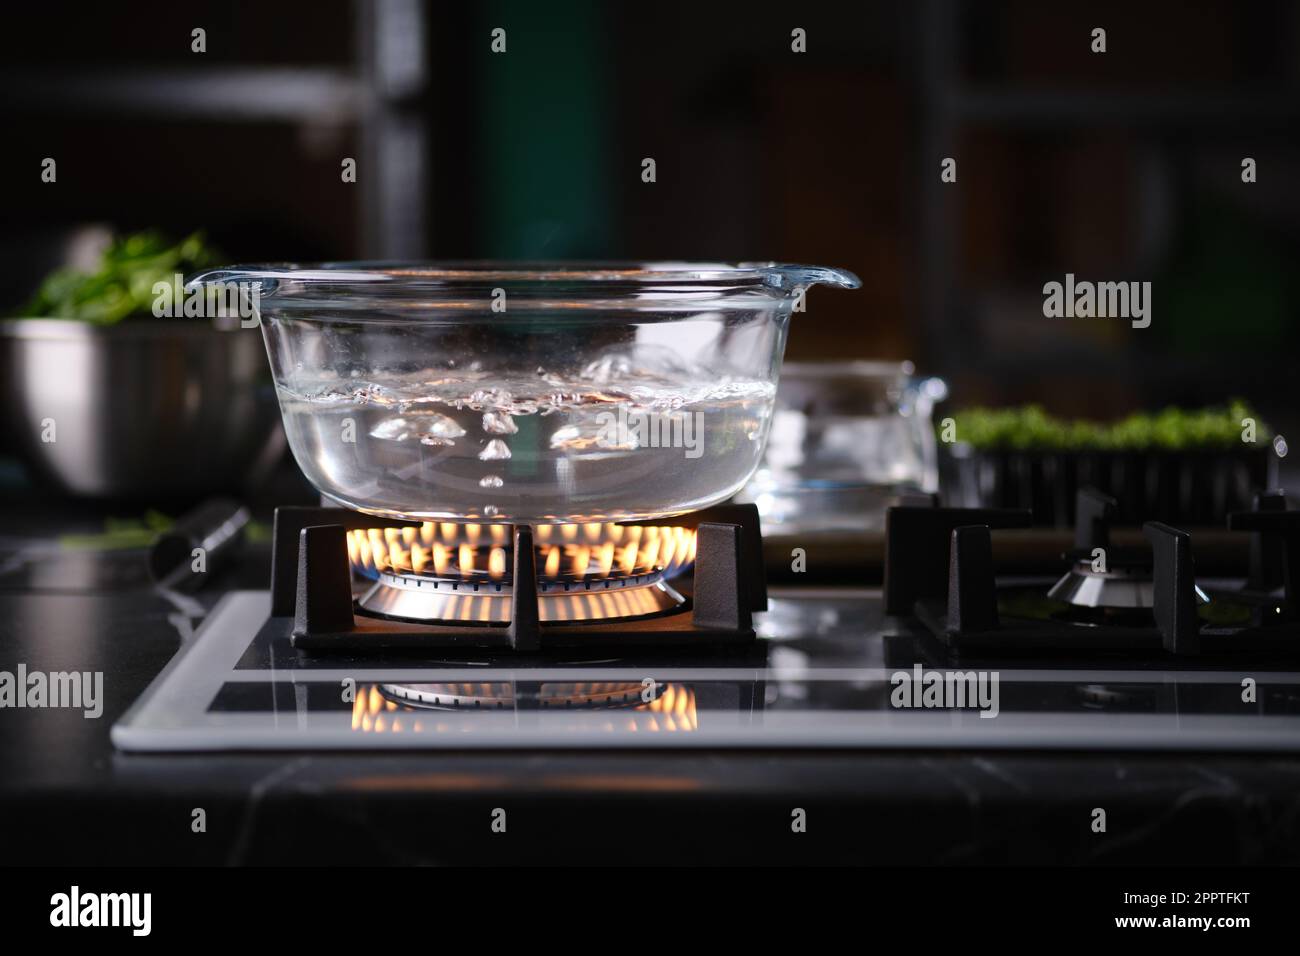 https://c8.alamy.com/comp/2PPTFKT/water-boiling-in-transparent-glass-pot-on-gas-stove-2PPTFKT.jpg